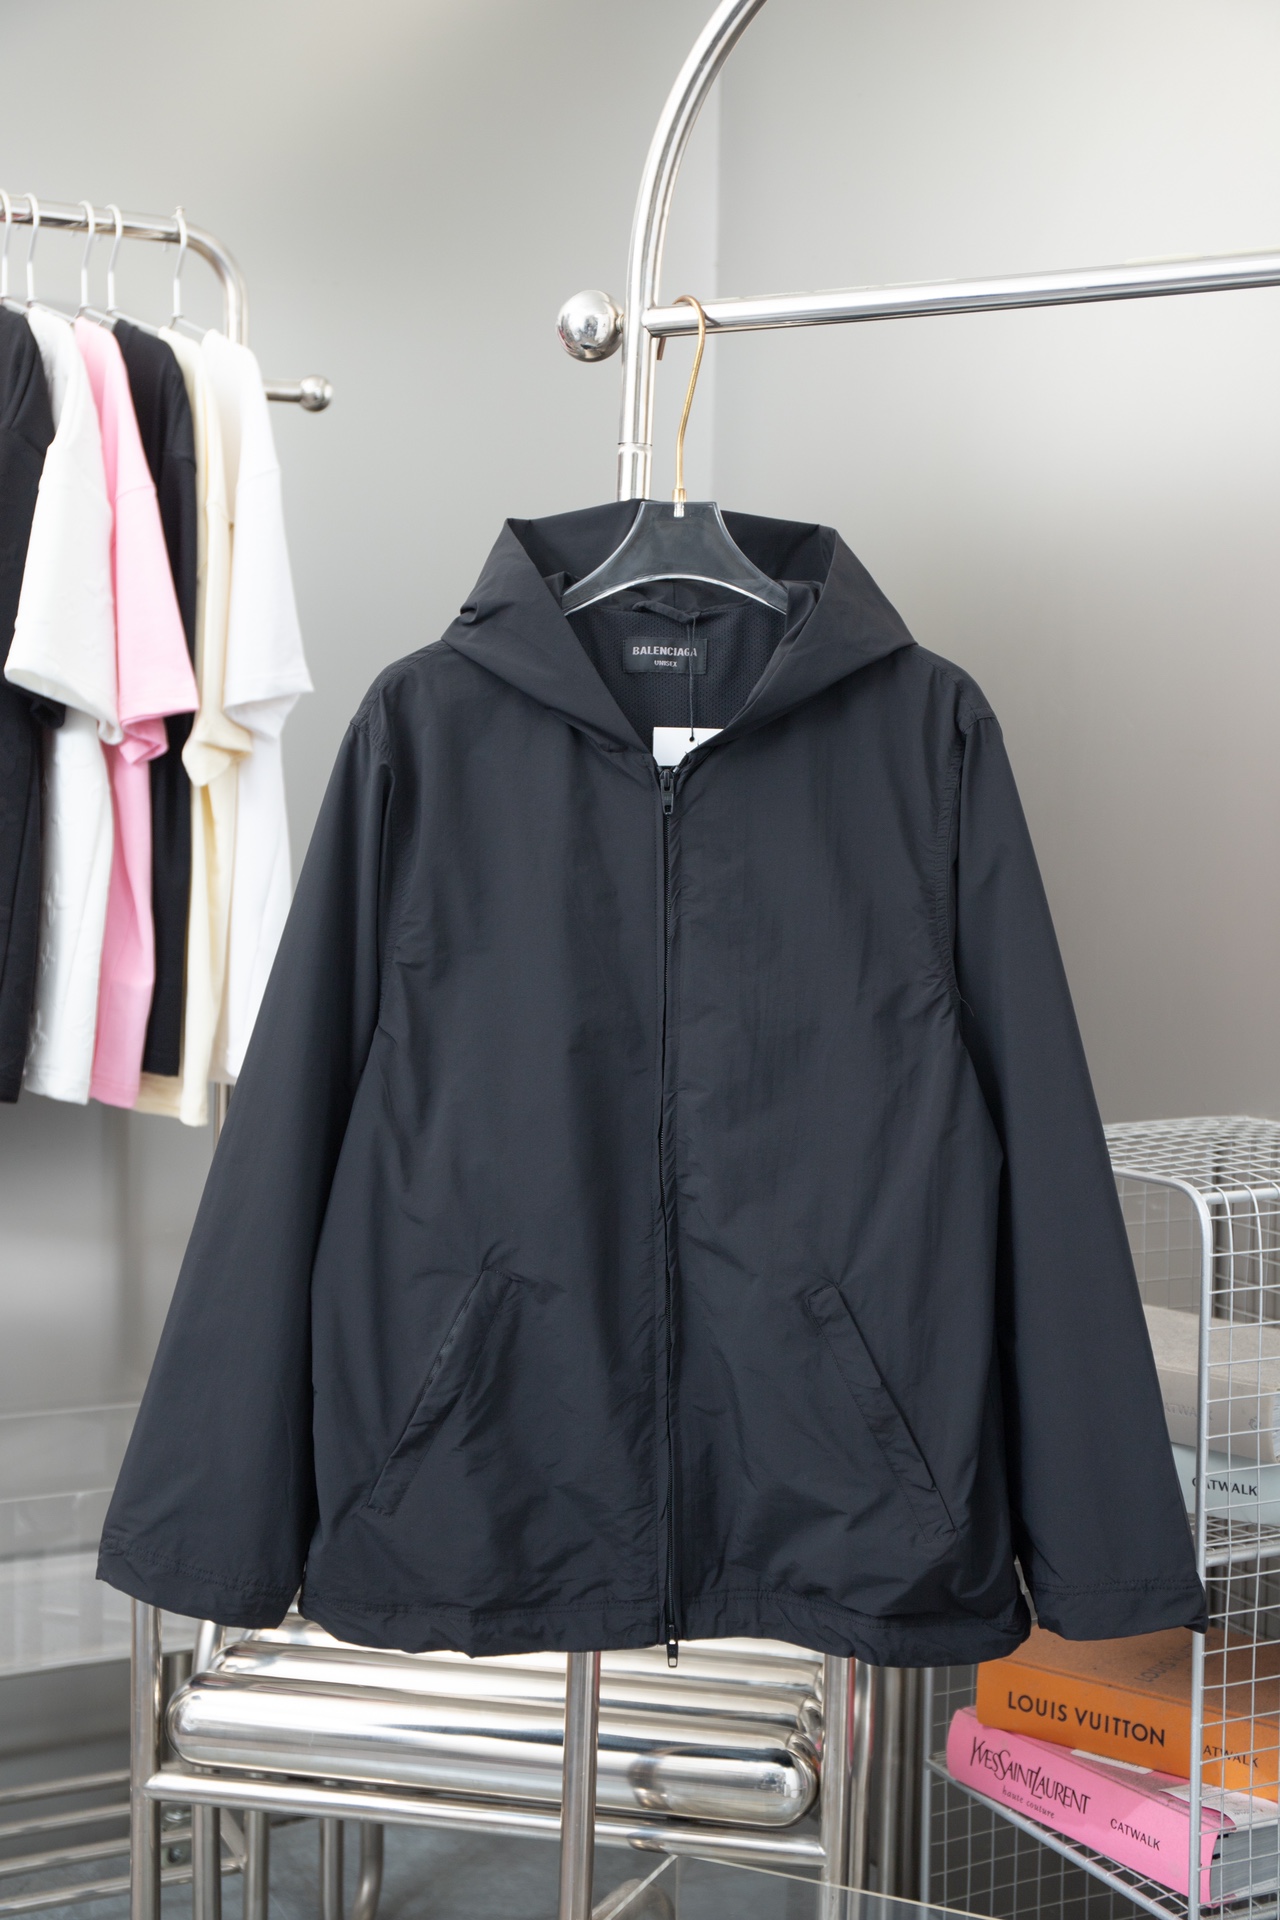 Balenciaga Clothing Coats & Jackets Windbreaker Fall Collection